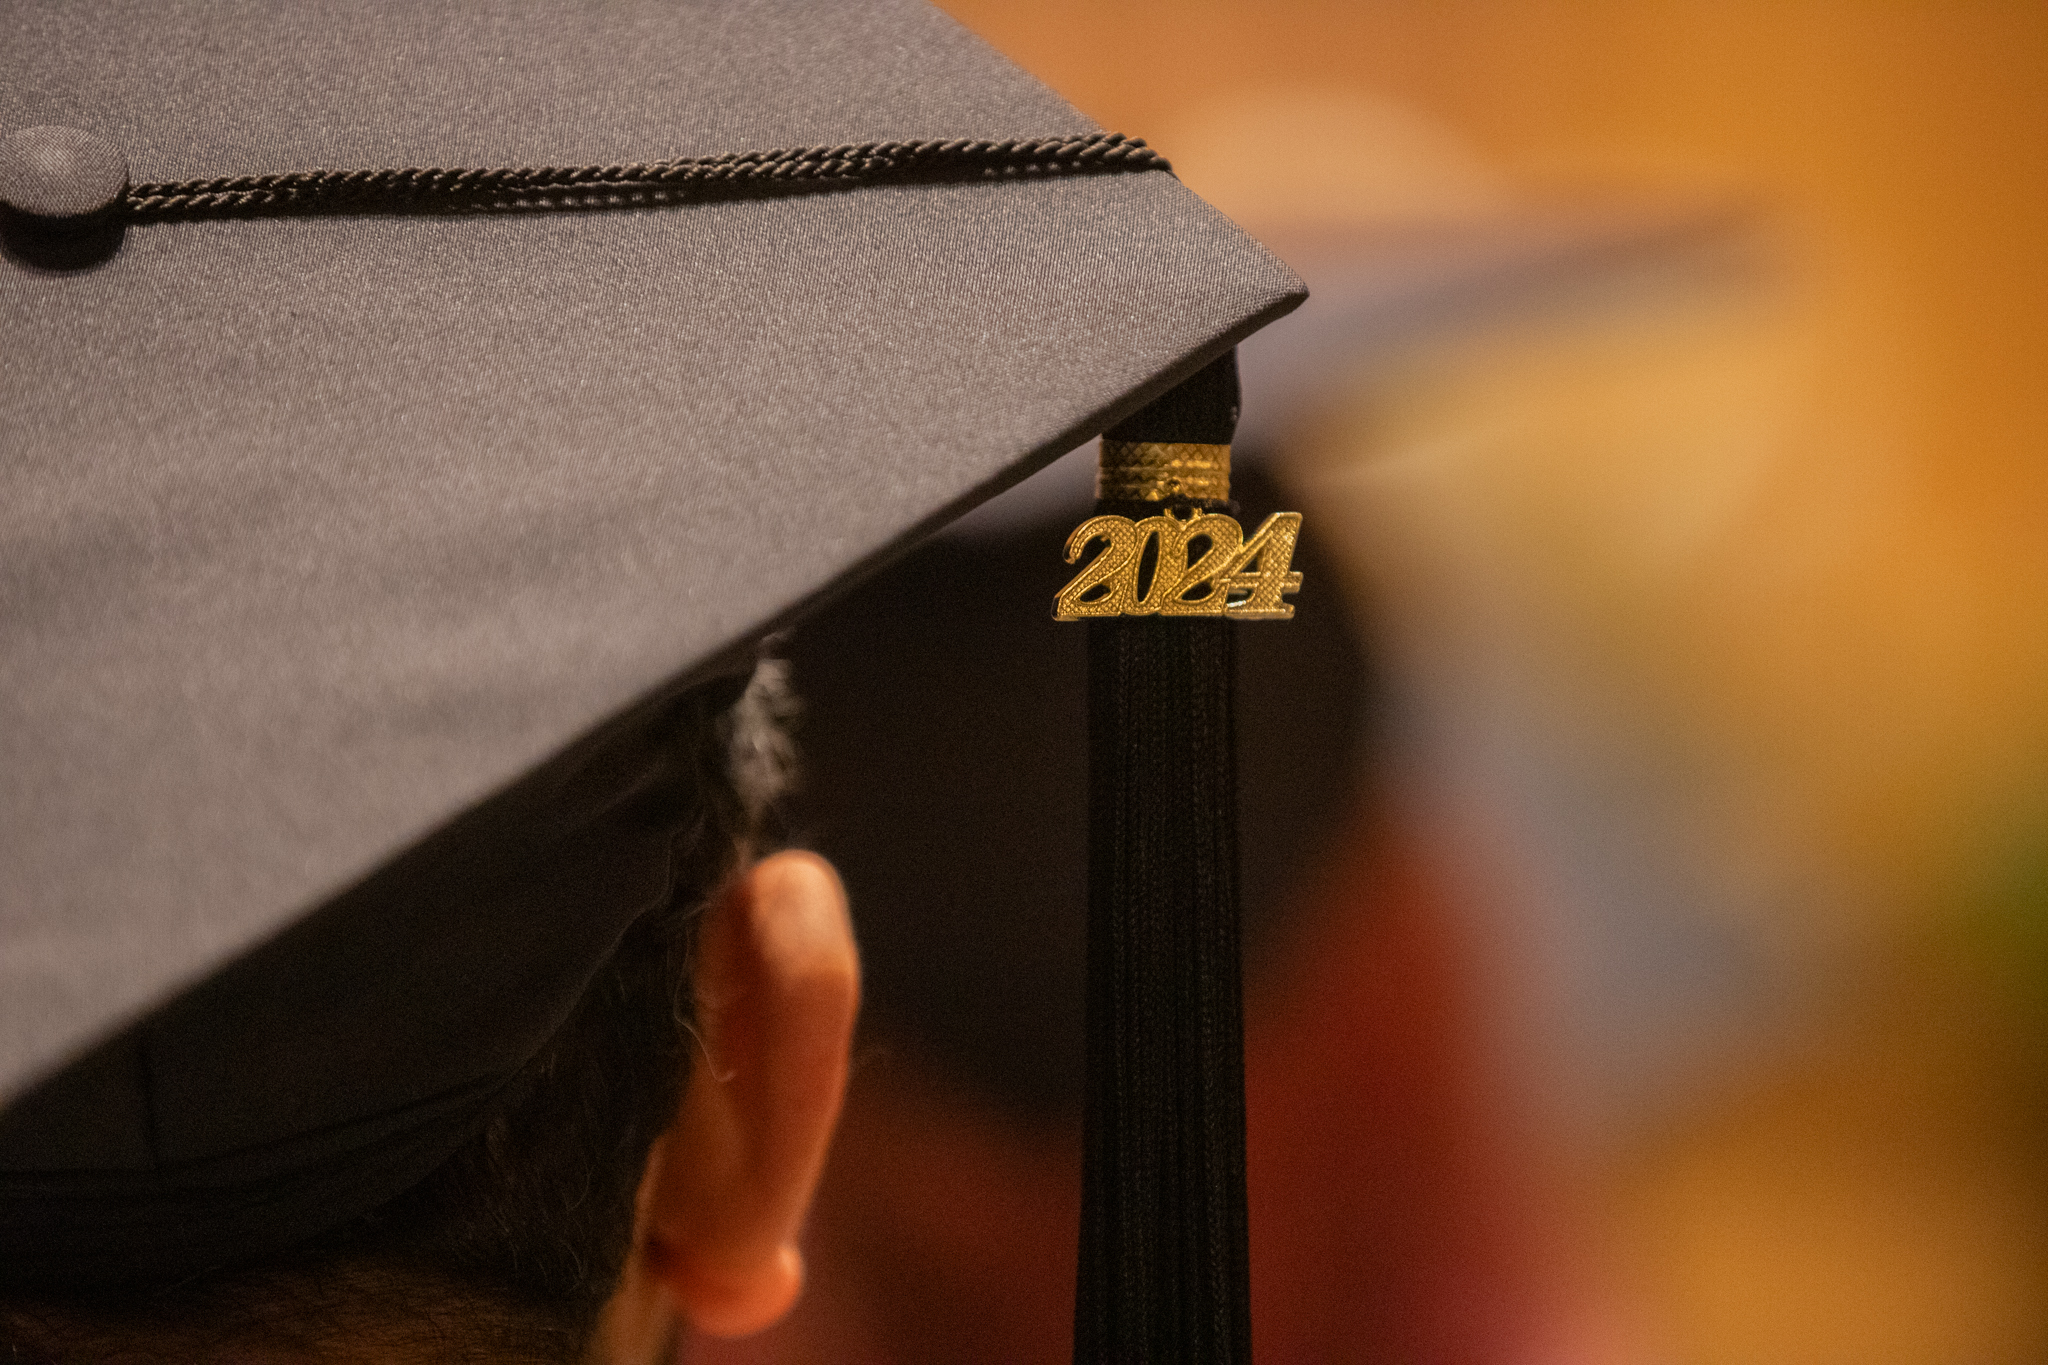 Graduation cap and tassel reading "2024"